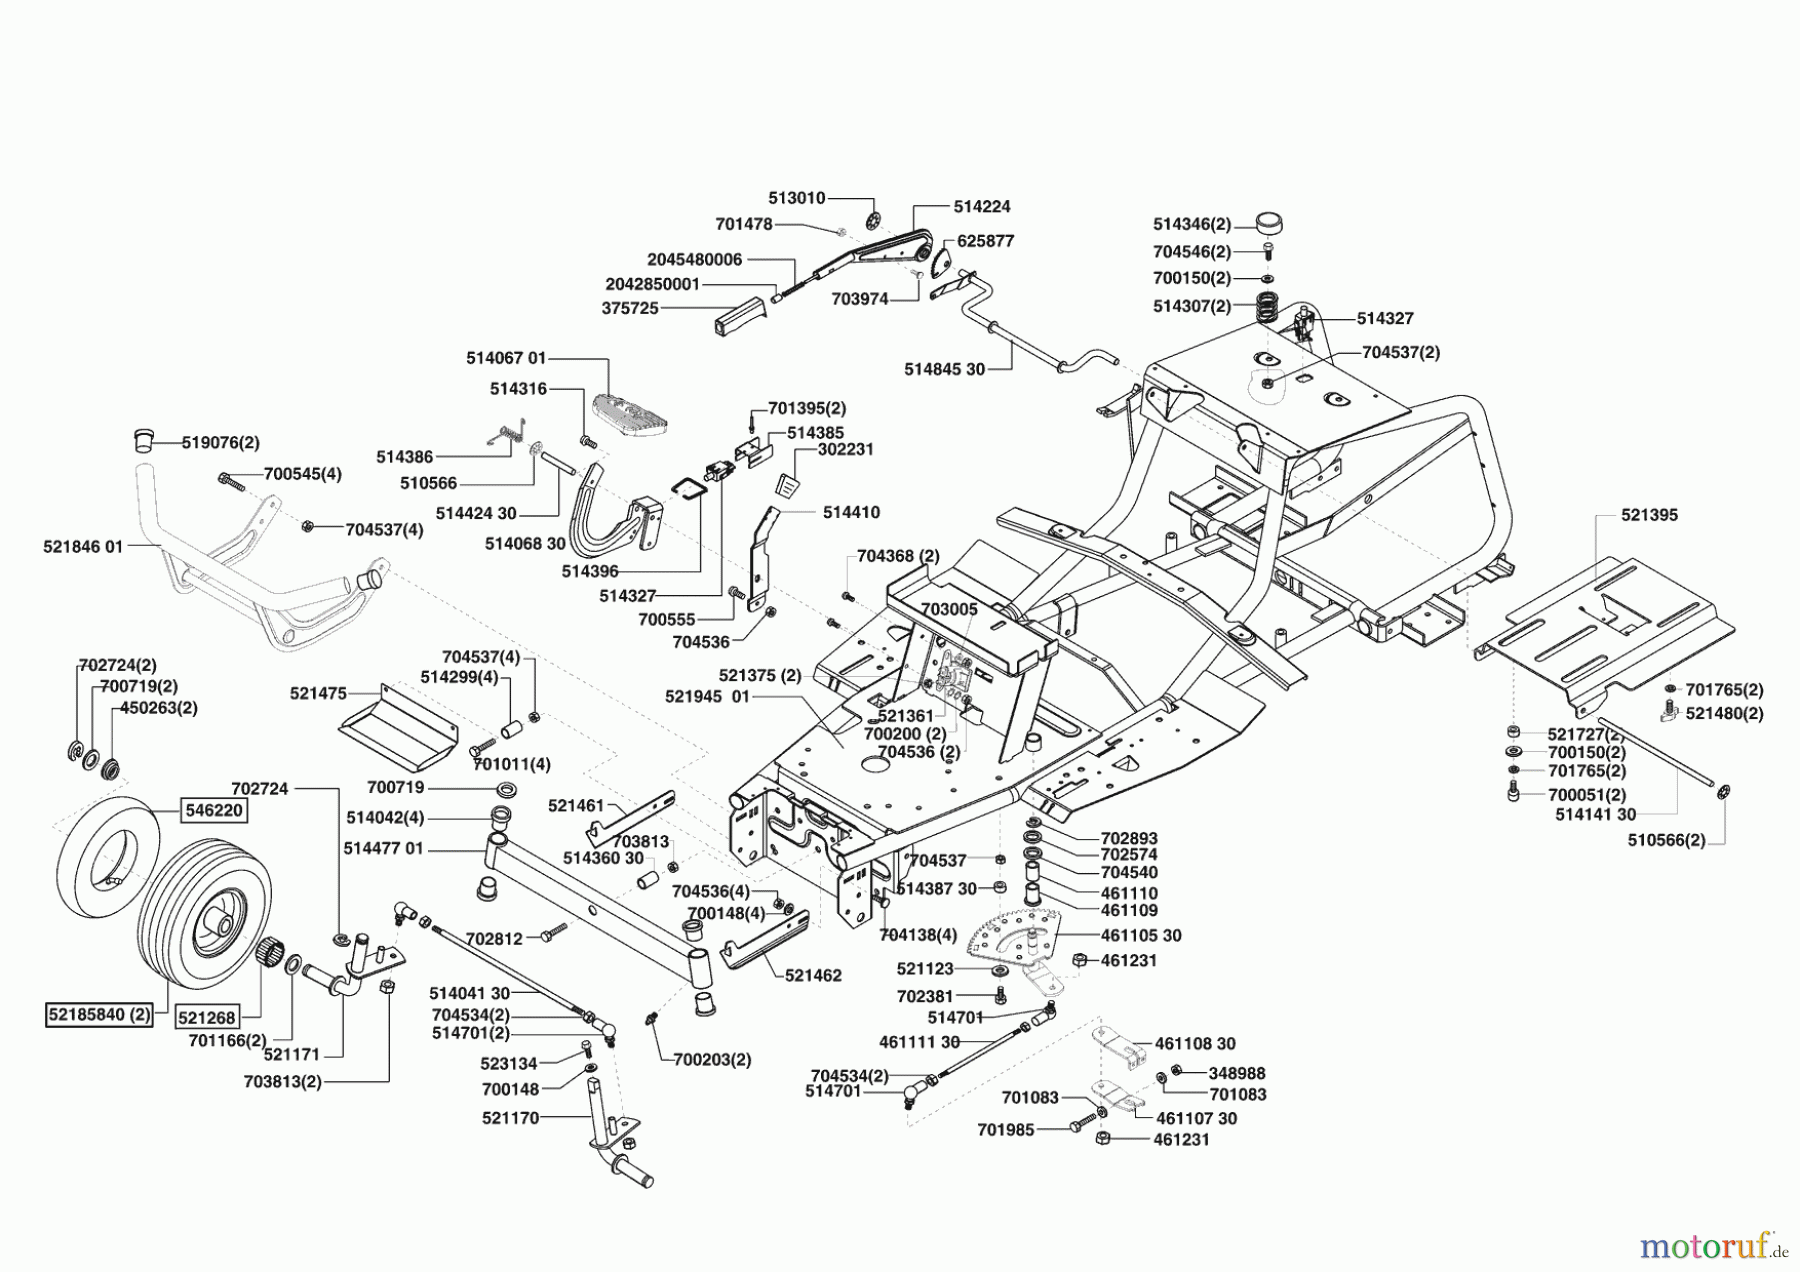  Powerline Gartentechnik Rasentraktor T 15-102 S ab 10/2003 Seite 2